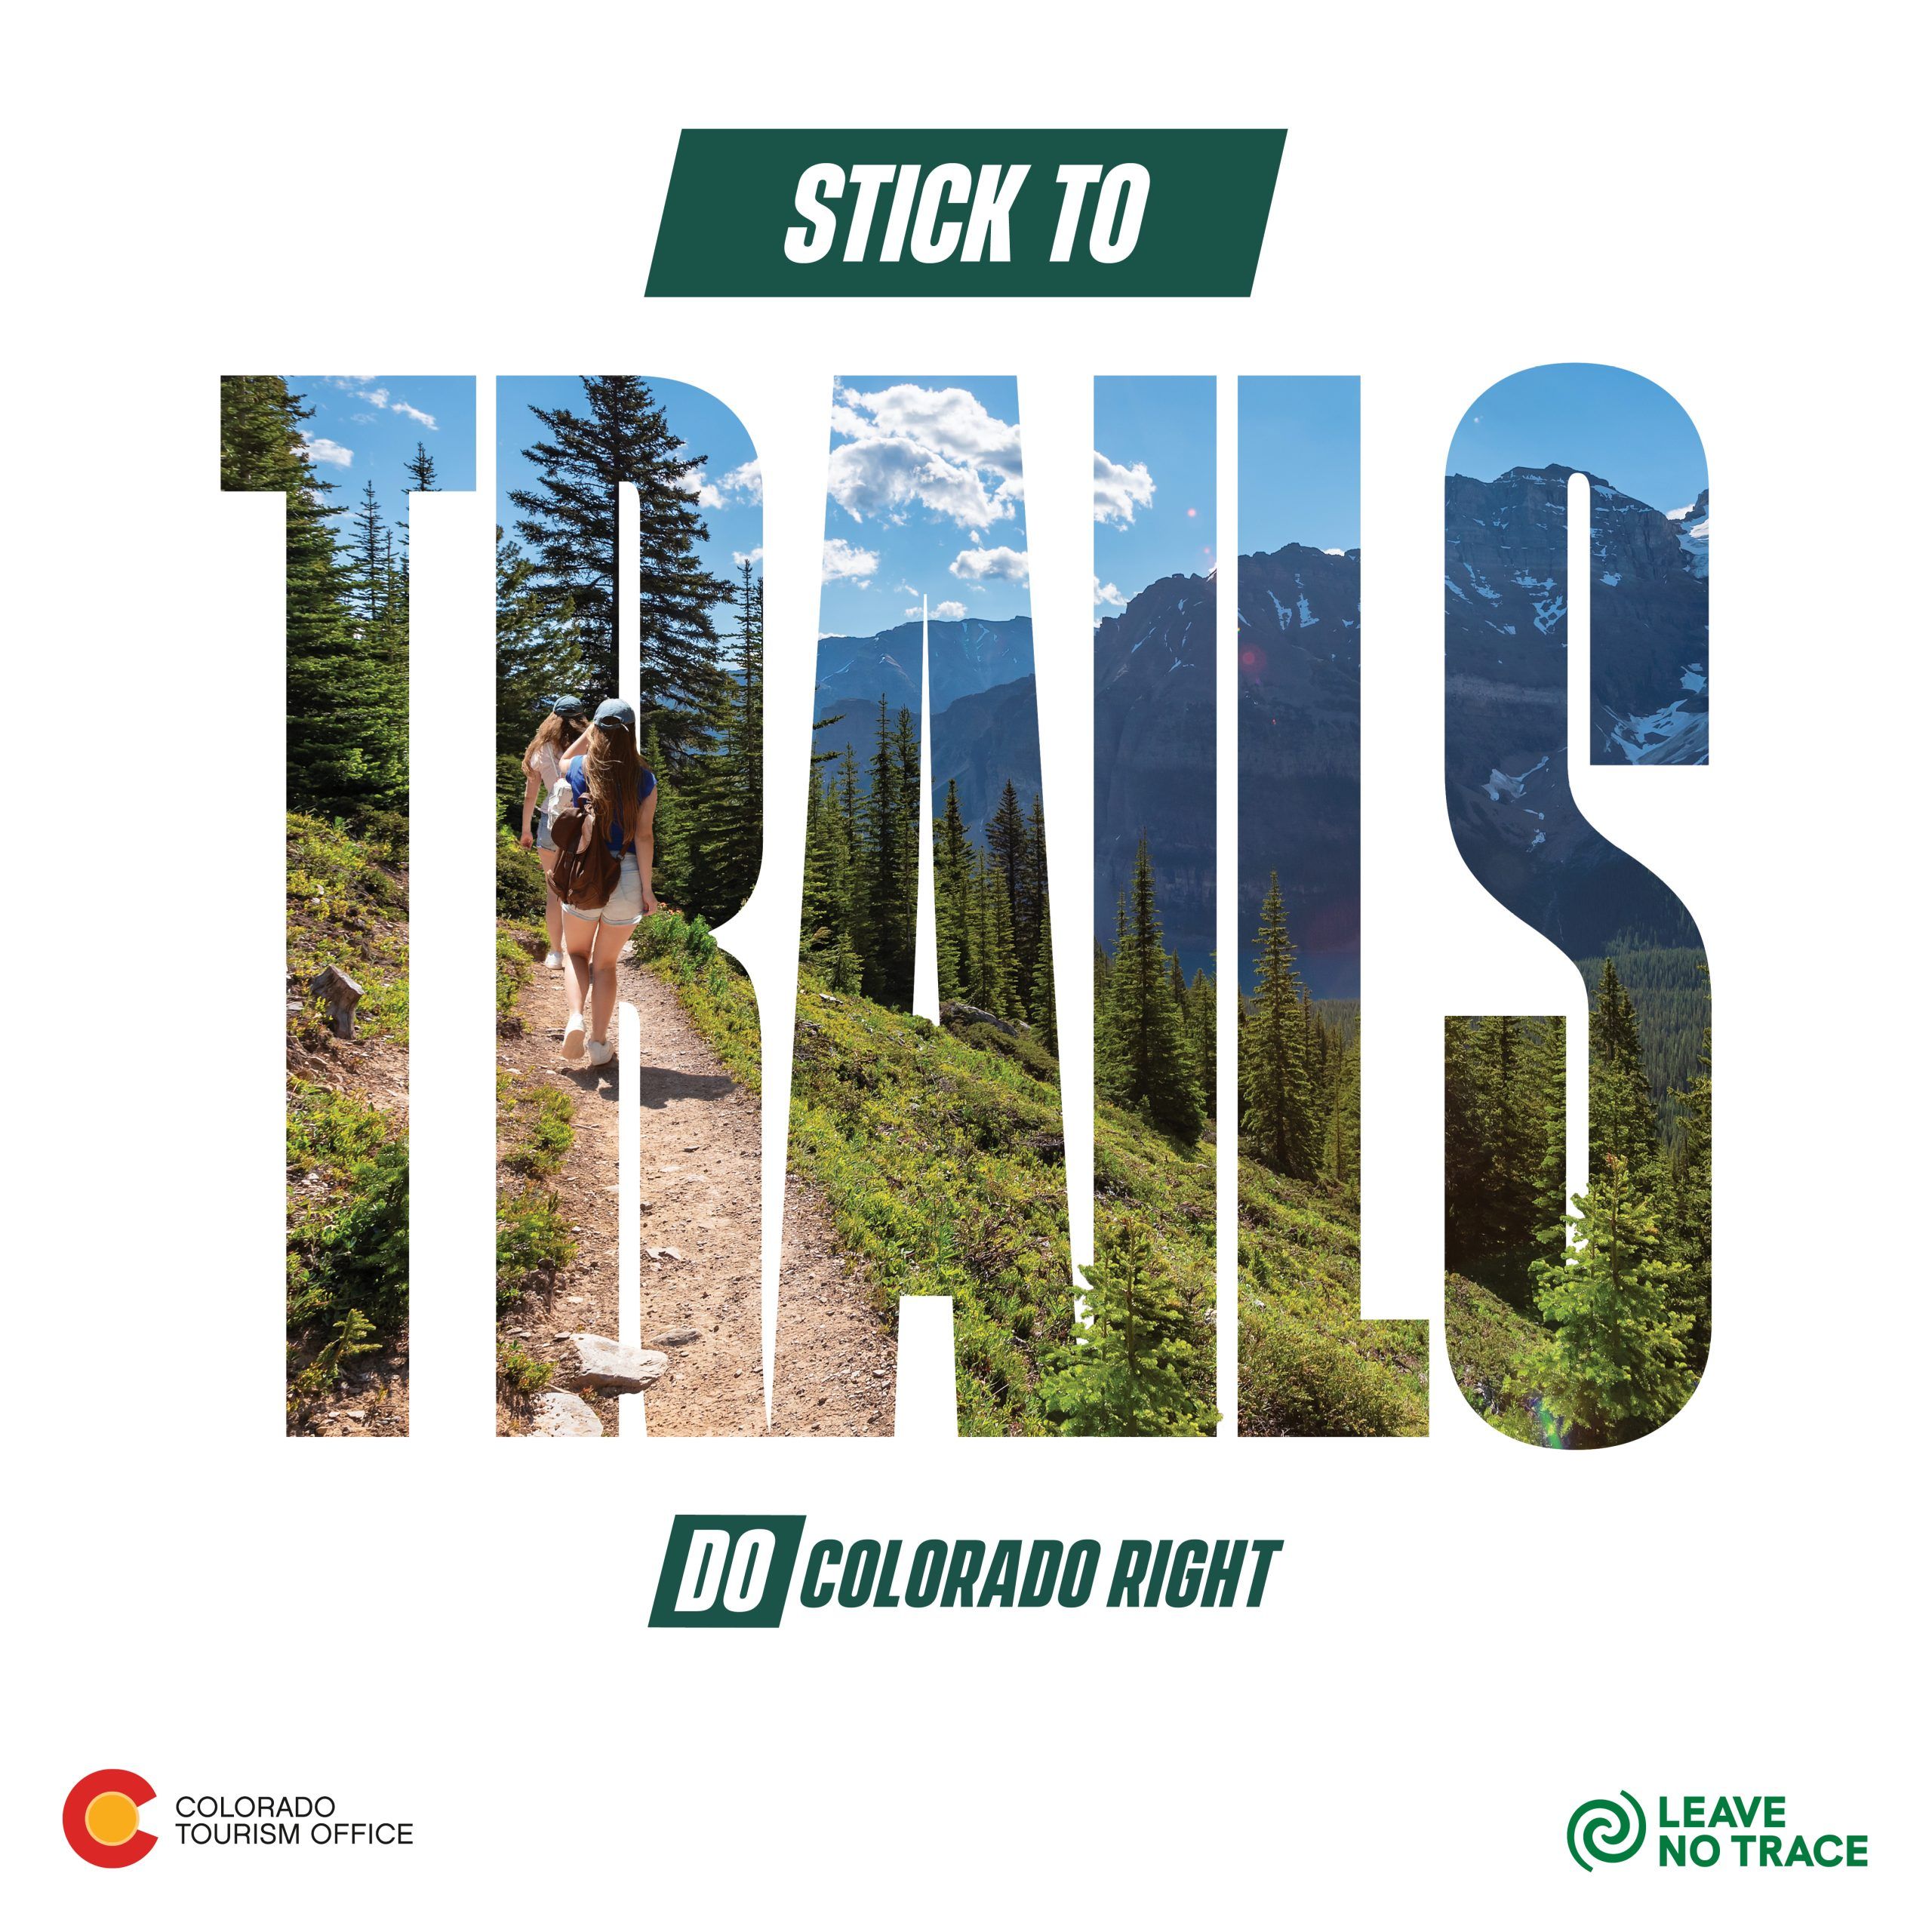 Stick to trails